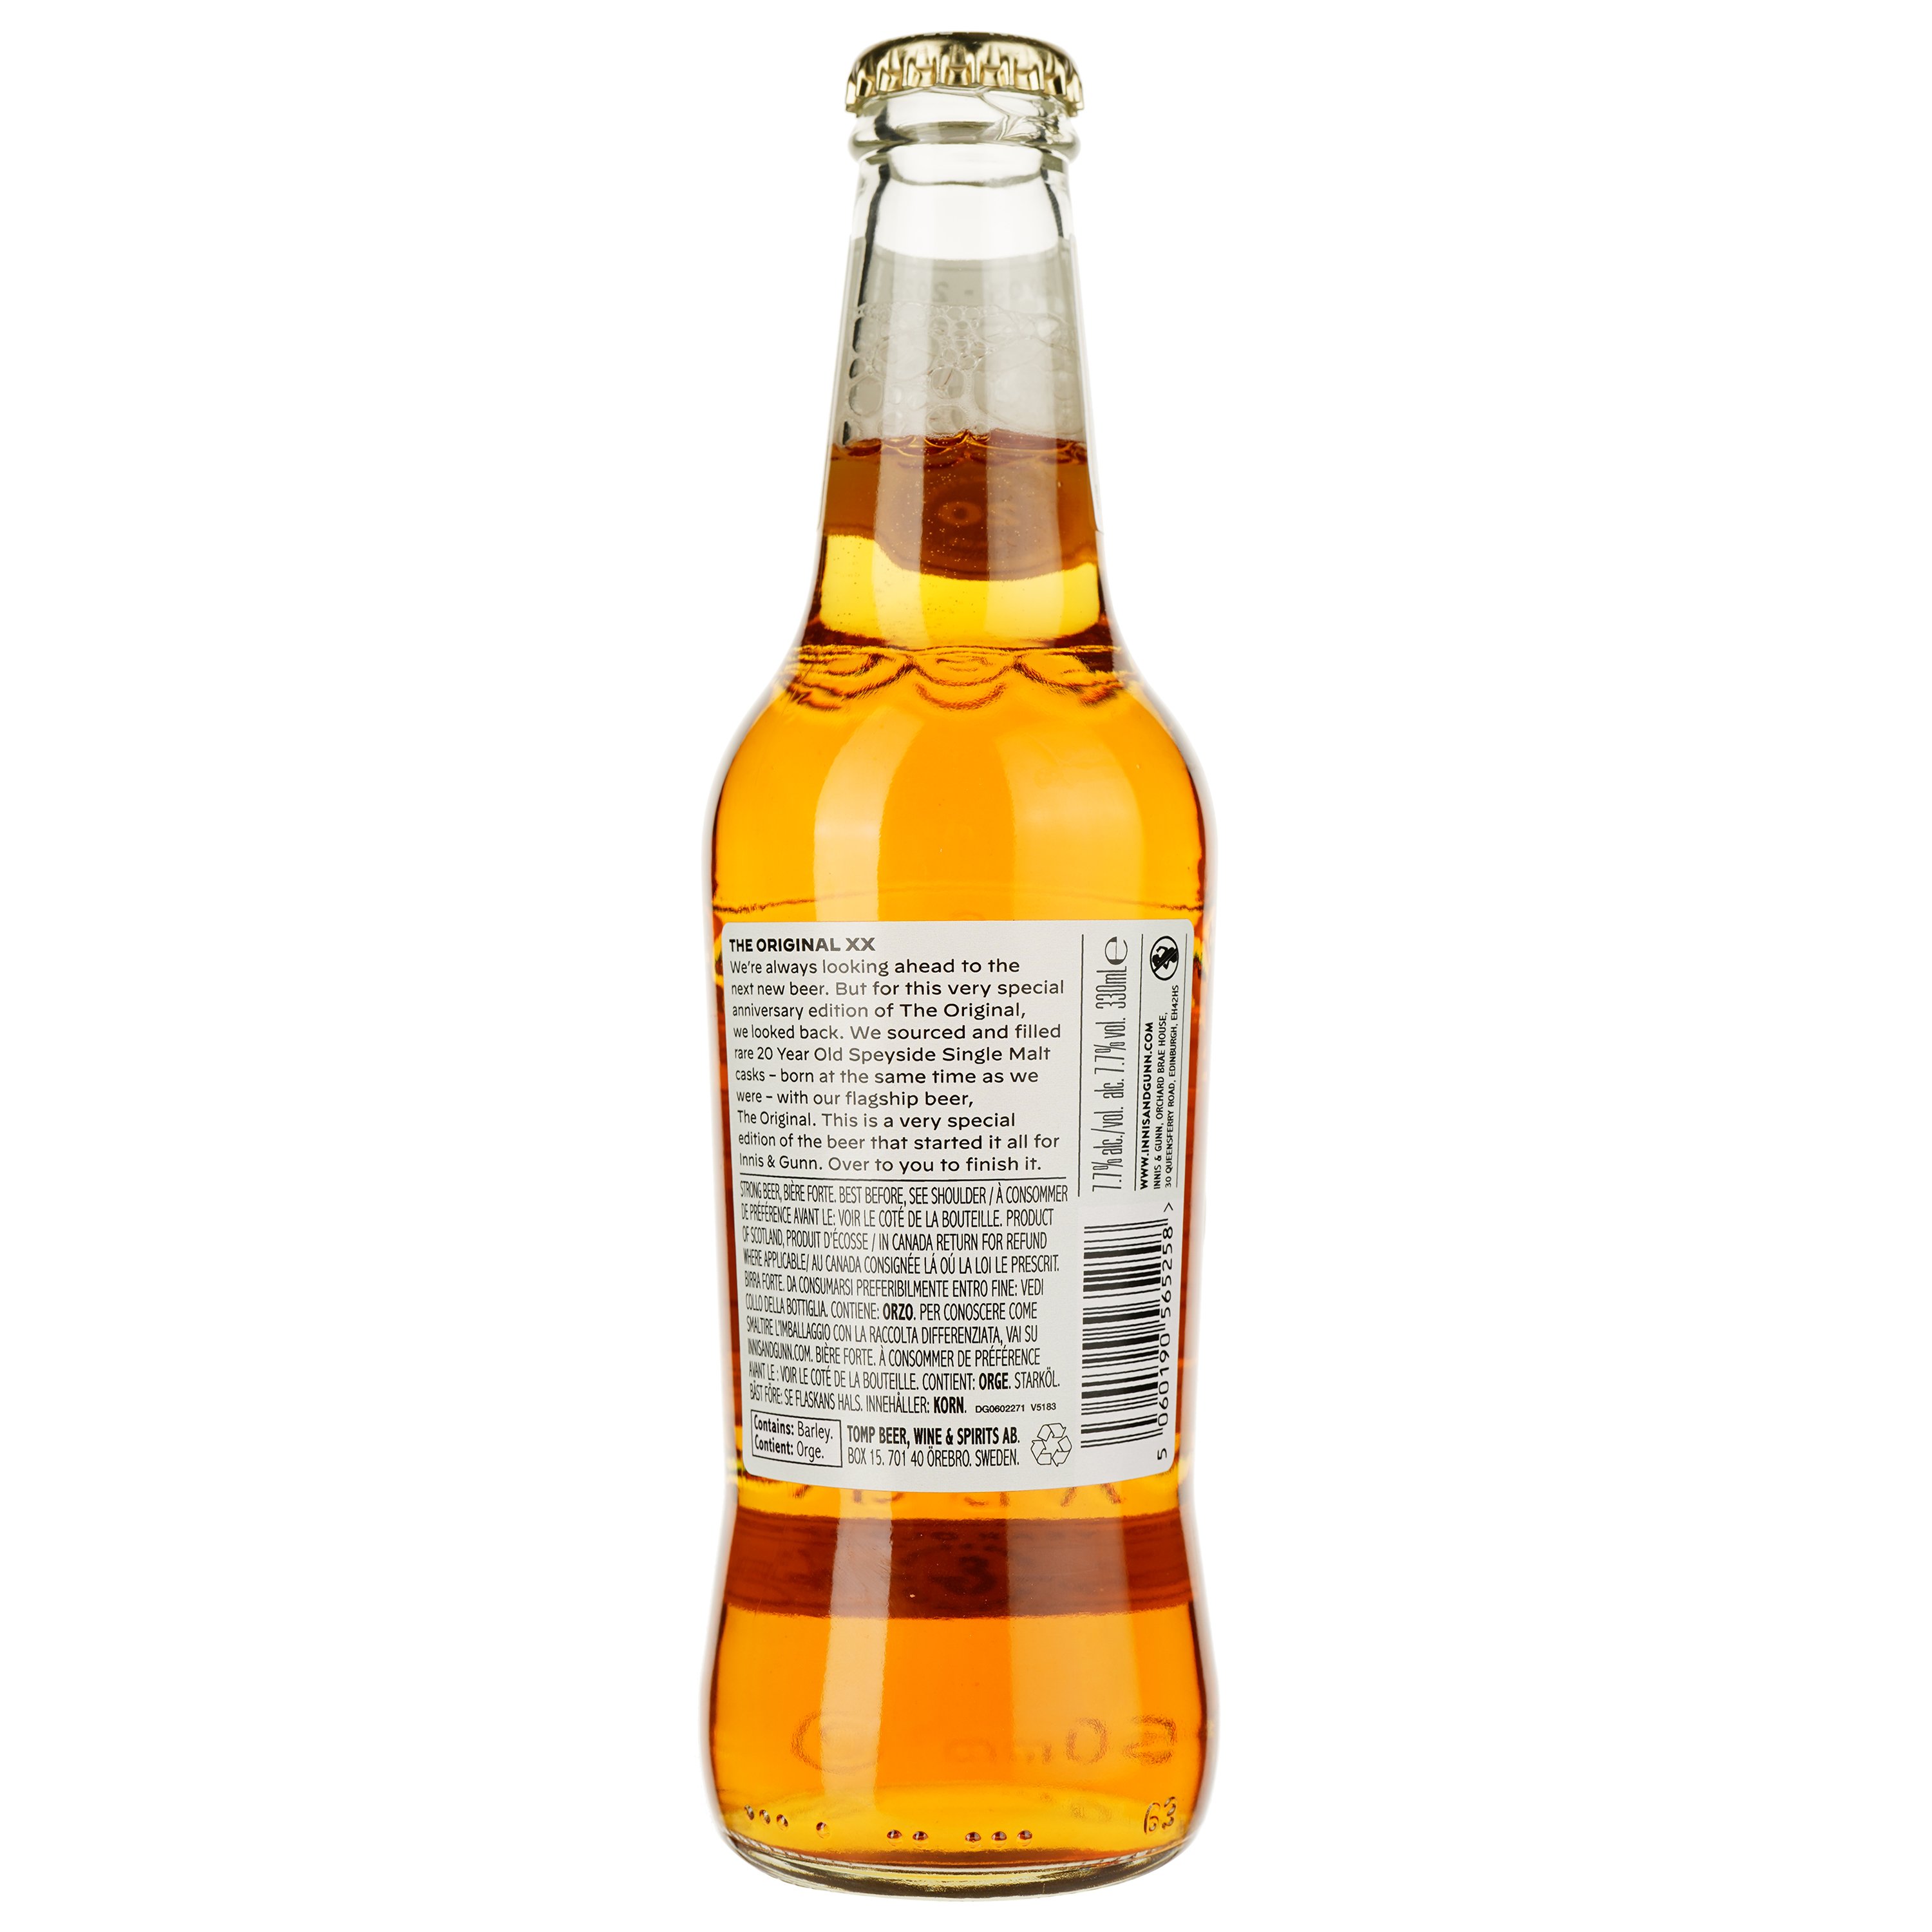 Пиво Innis & Gunn The Original XX, янтарное, 7.7% 0.33 л - фото 3